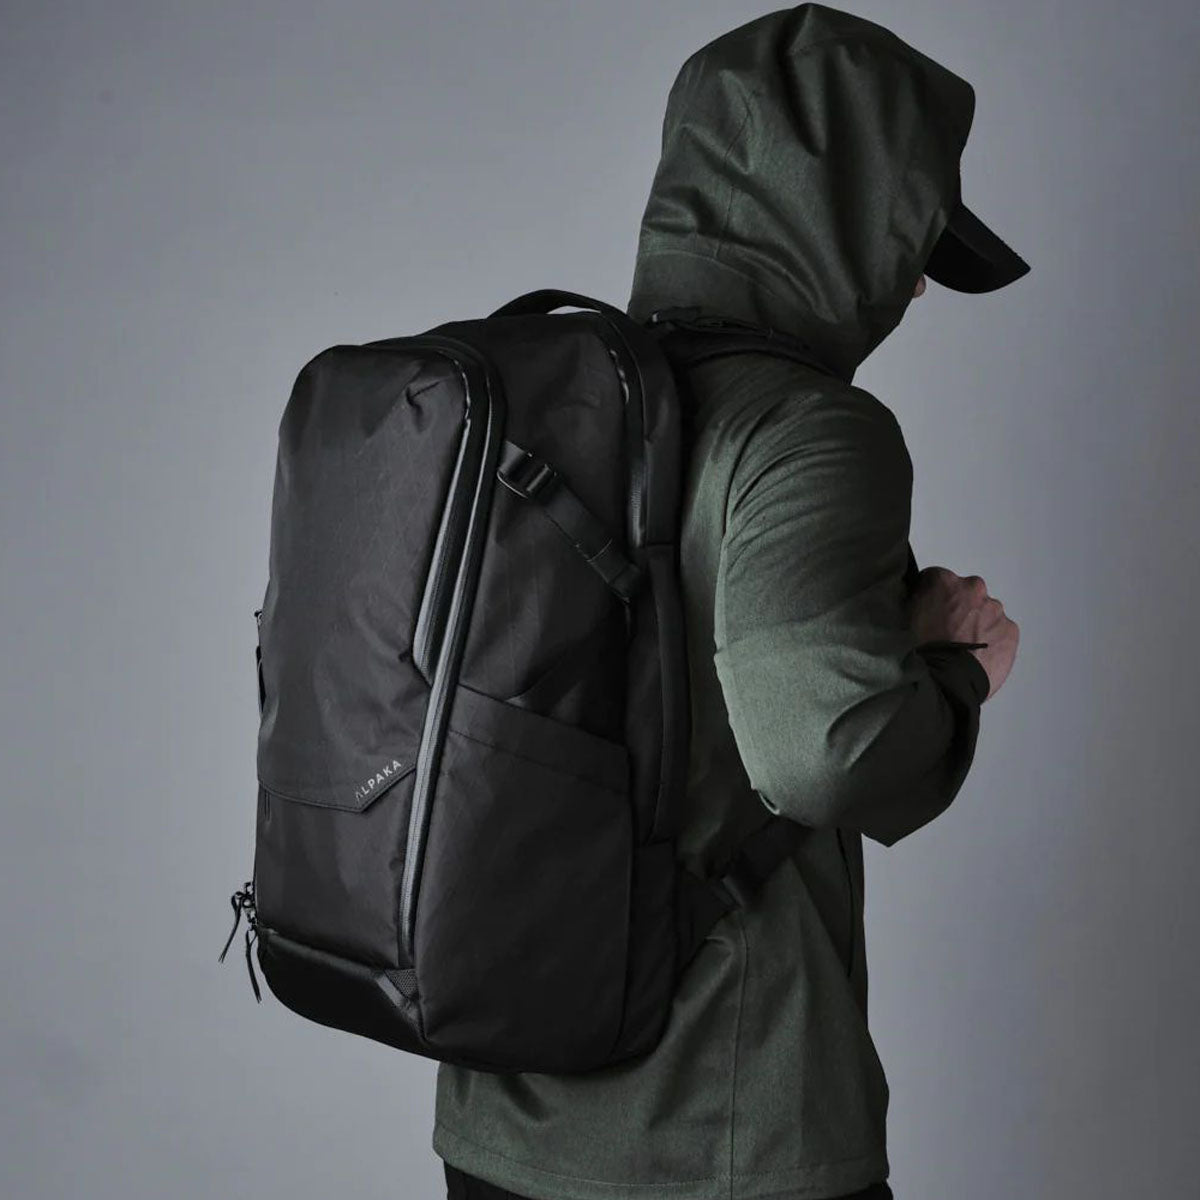 Alpaka Elements Travel Backpack - Black X-Pac VX42